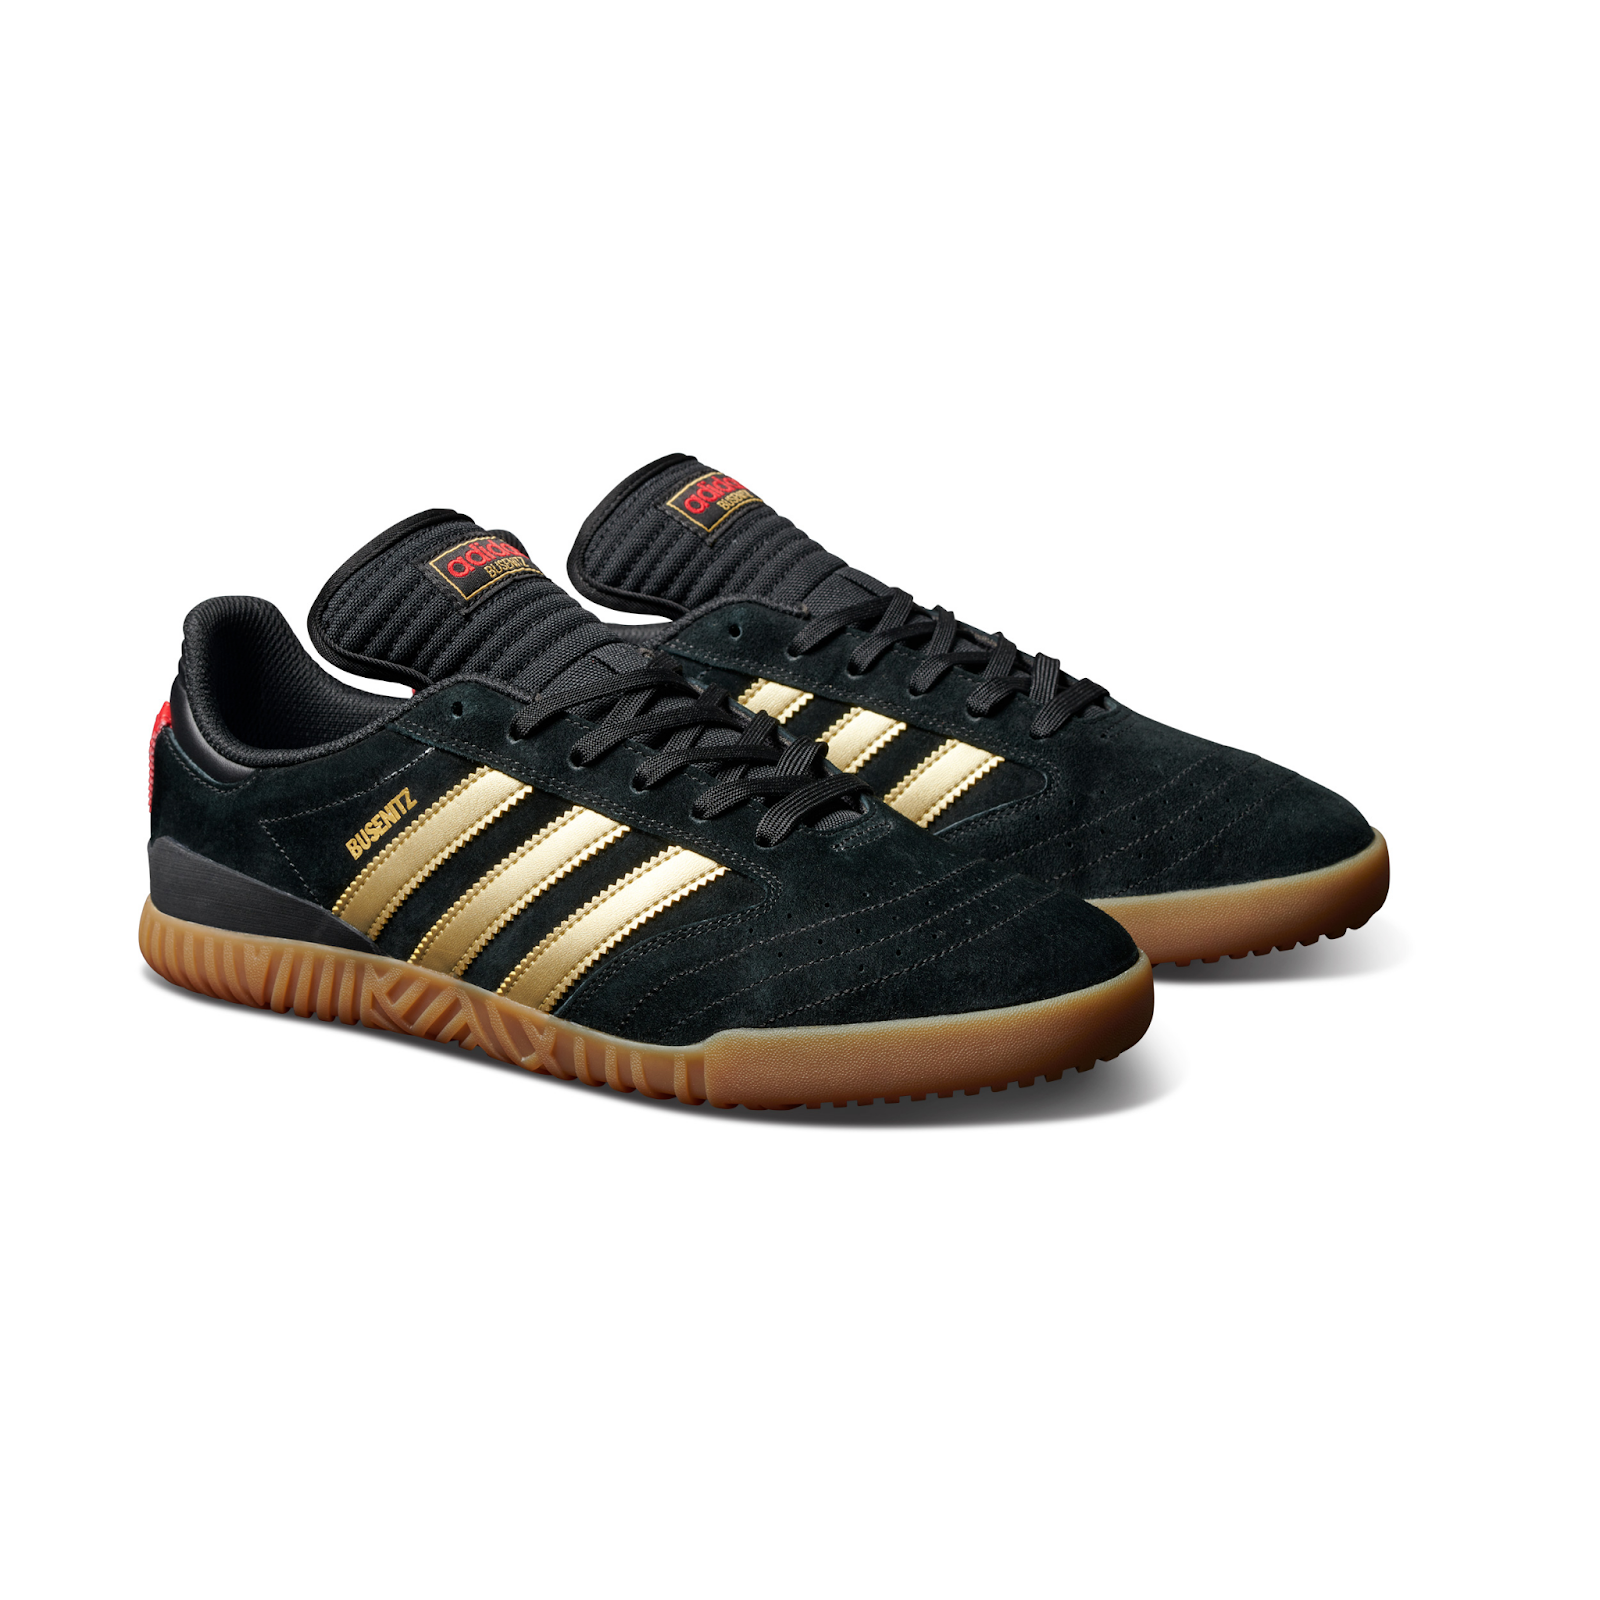 Adidas Busenitz Indoor Super Black/Gold